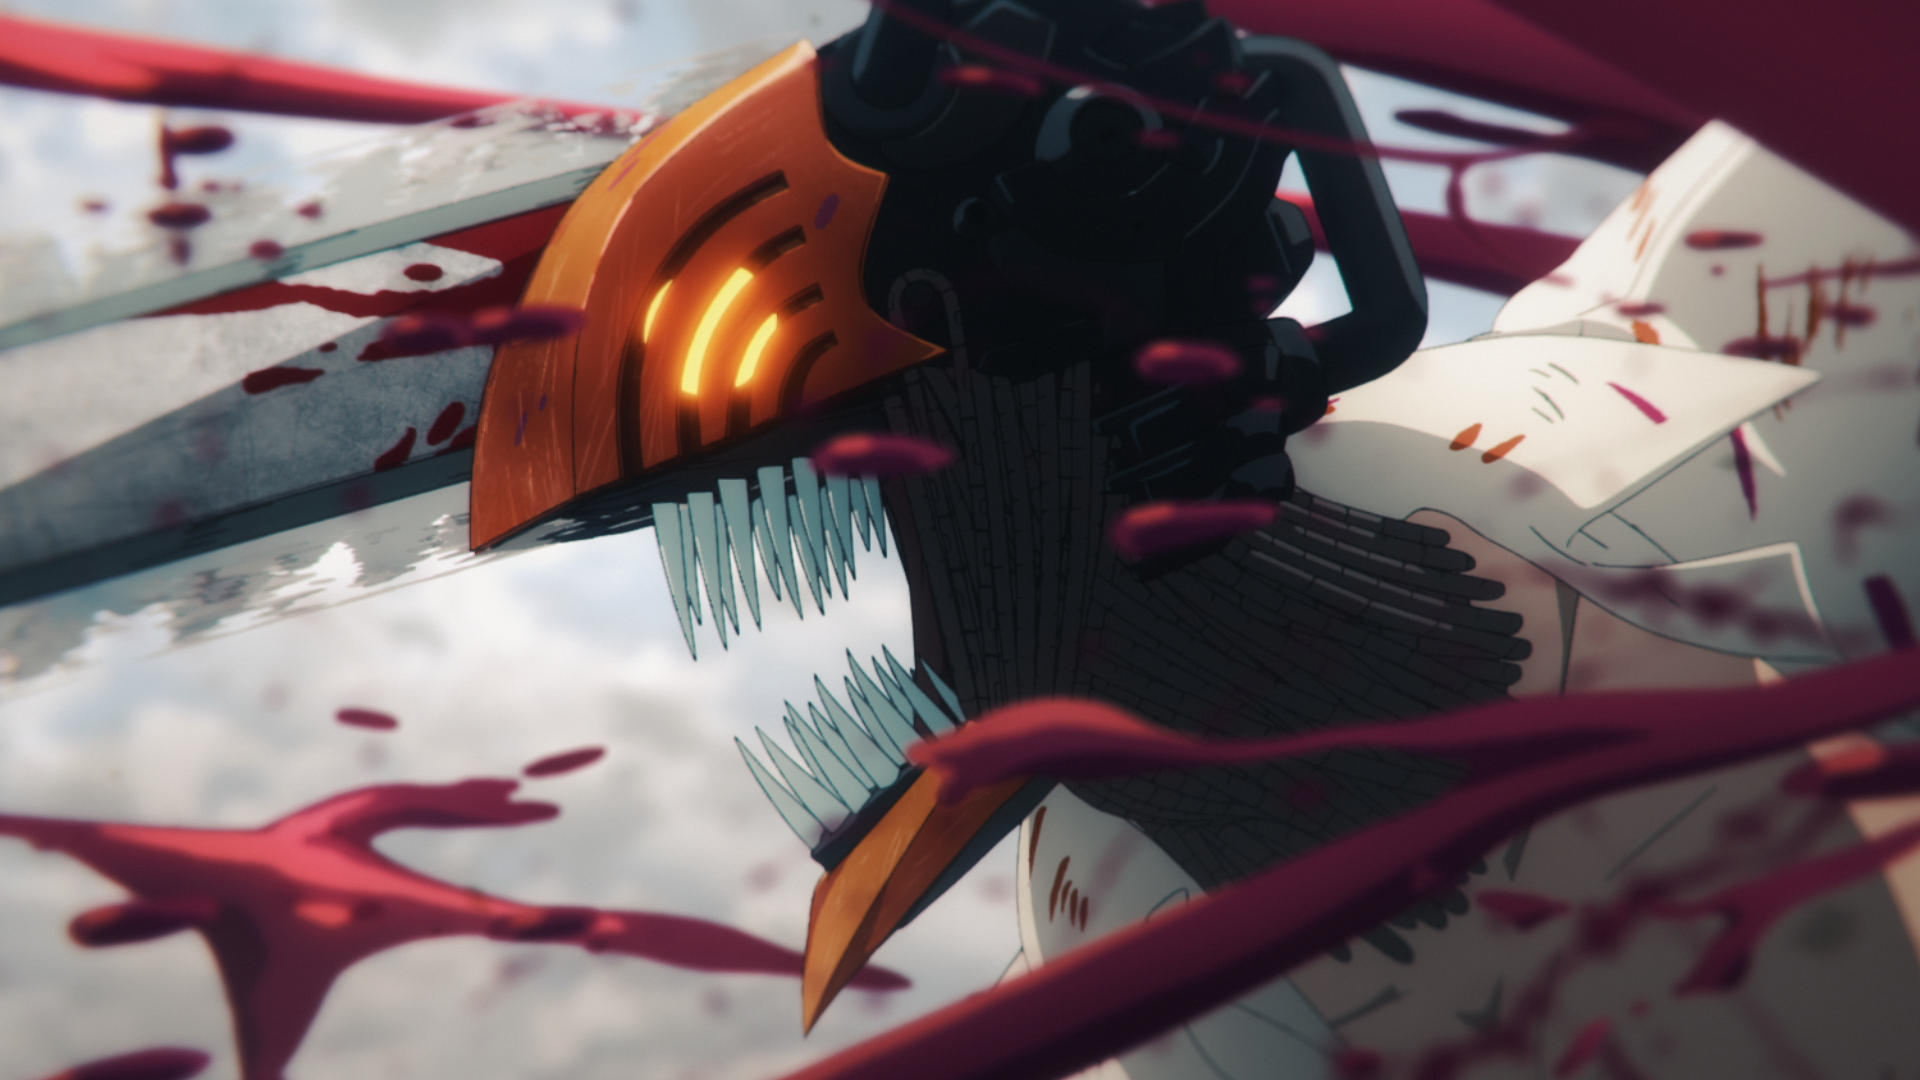 Crunchyroll Man Anime Releases Third Ending Video Featuring MAXIMUM THE HORMONE